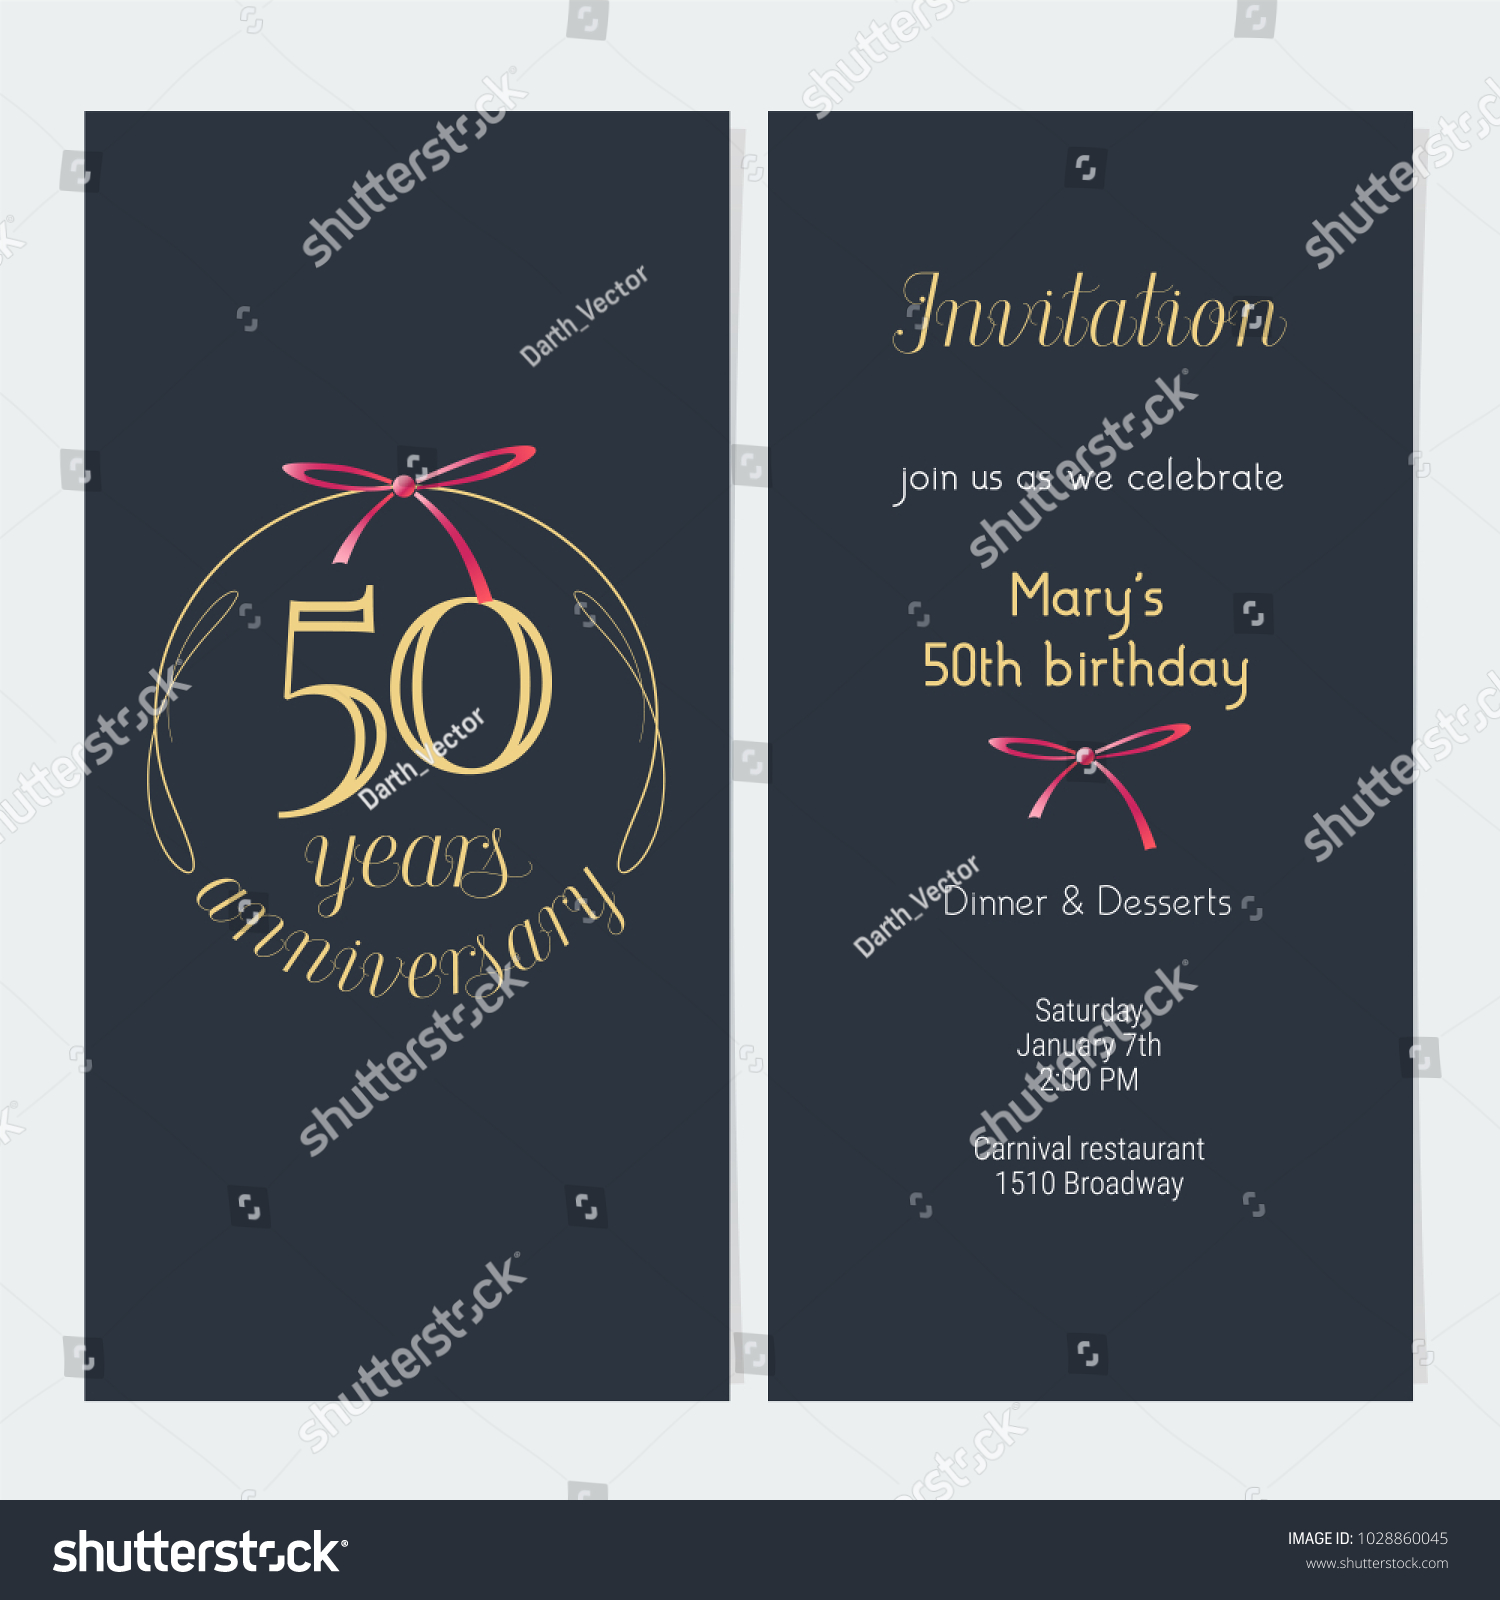 50 Years Anniversary Invitation Vector Illustration Stock Vector ...